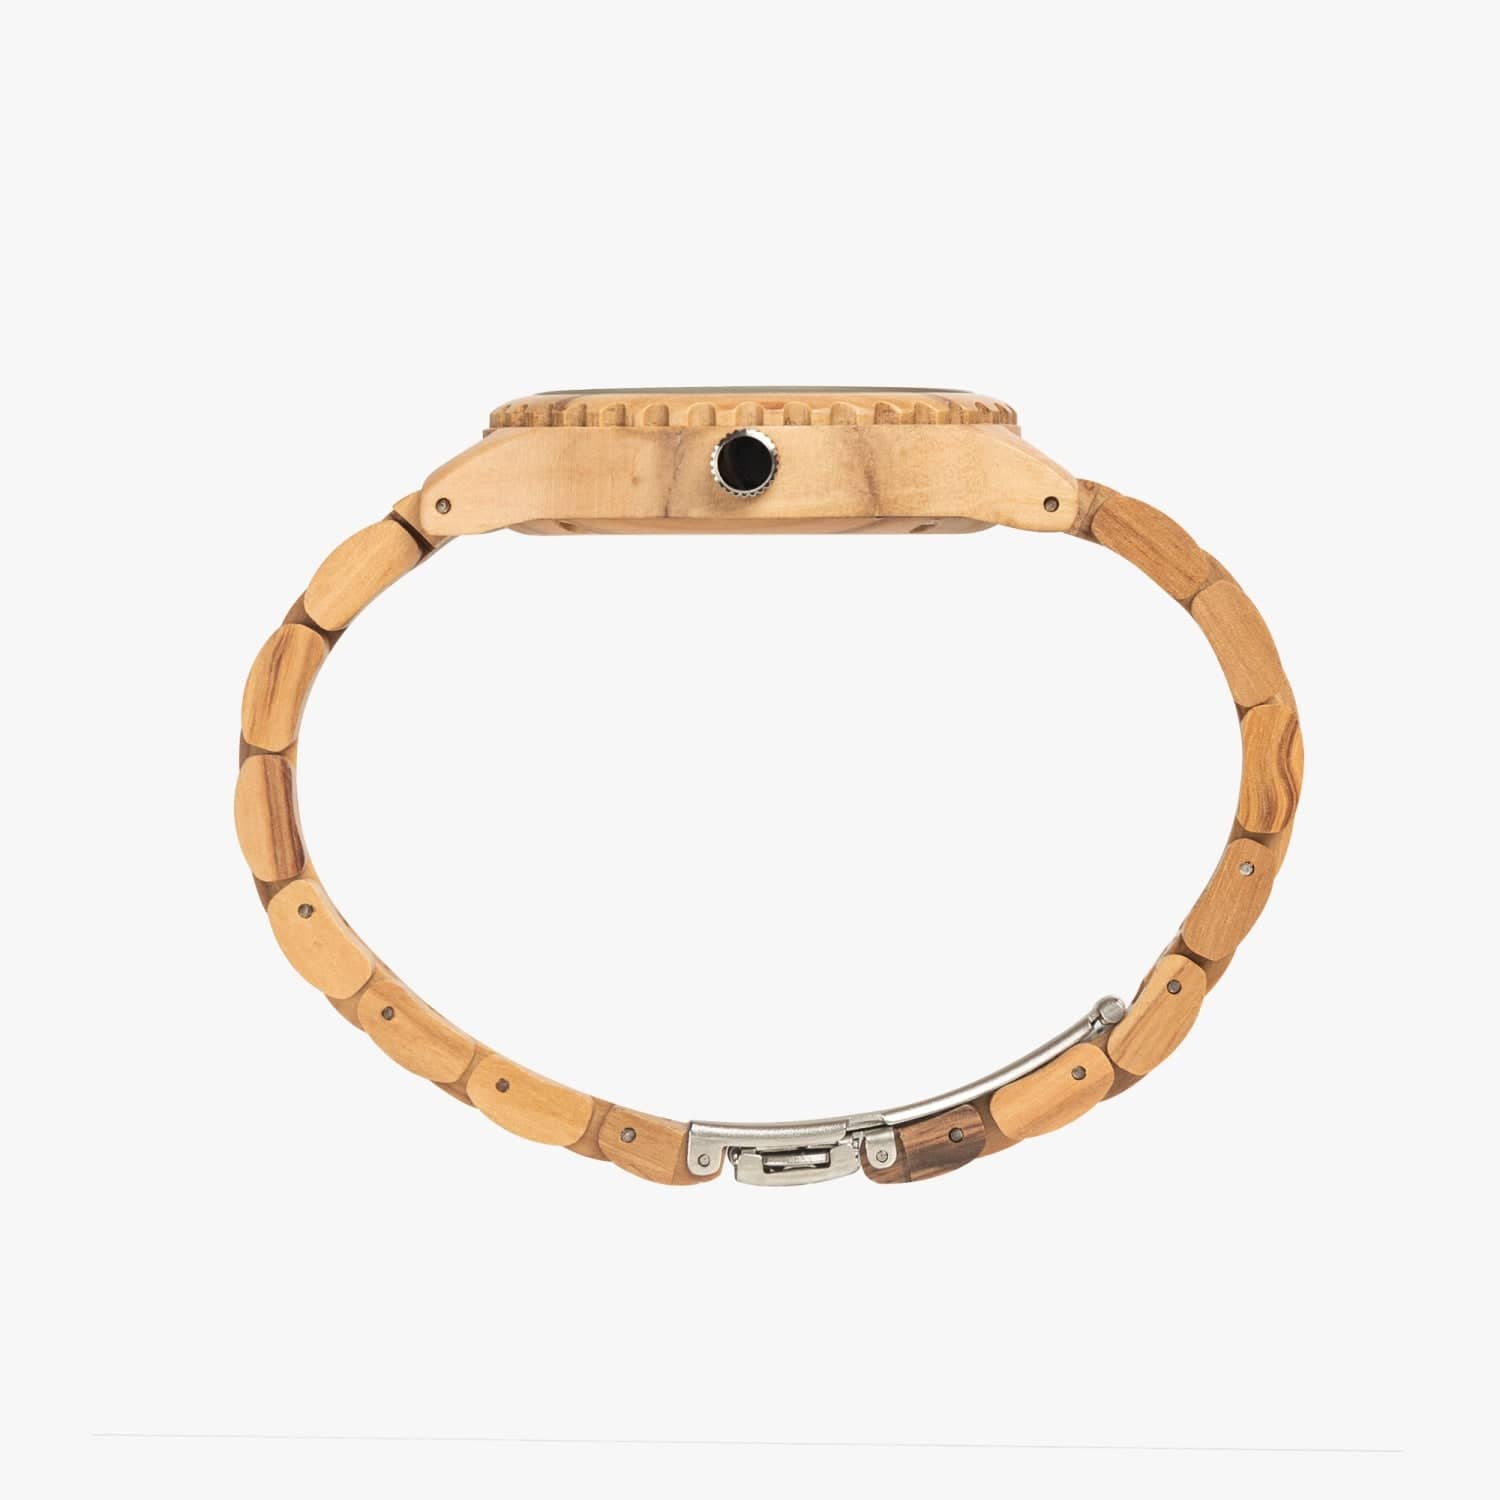 Venus, Italian Olive Lumber Wooden Watch, designed by Sensus Studio